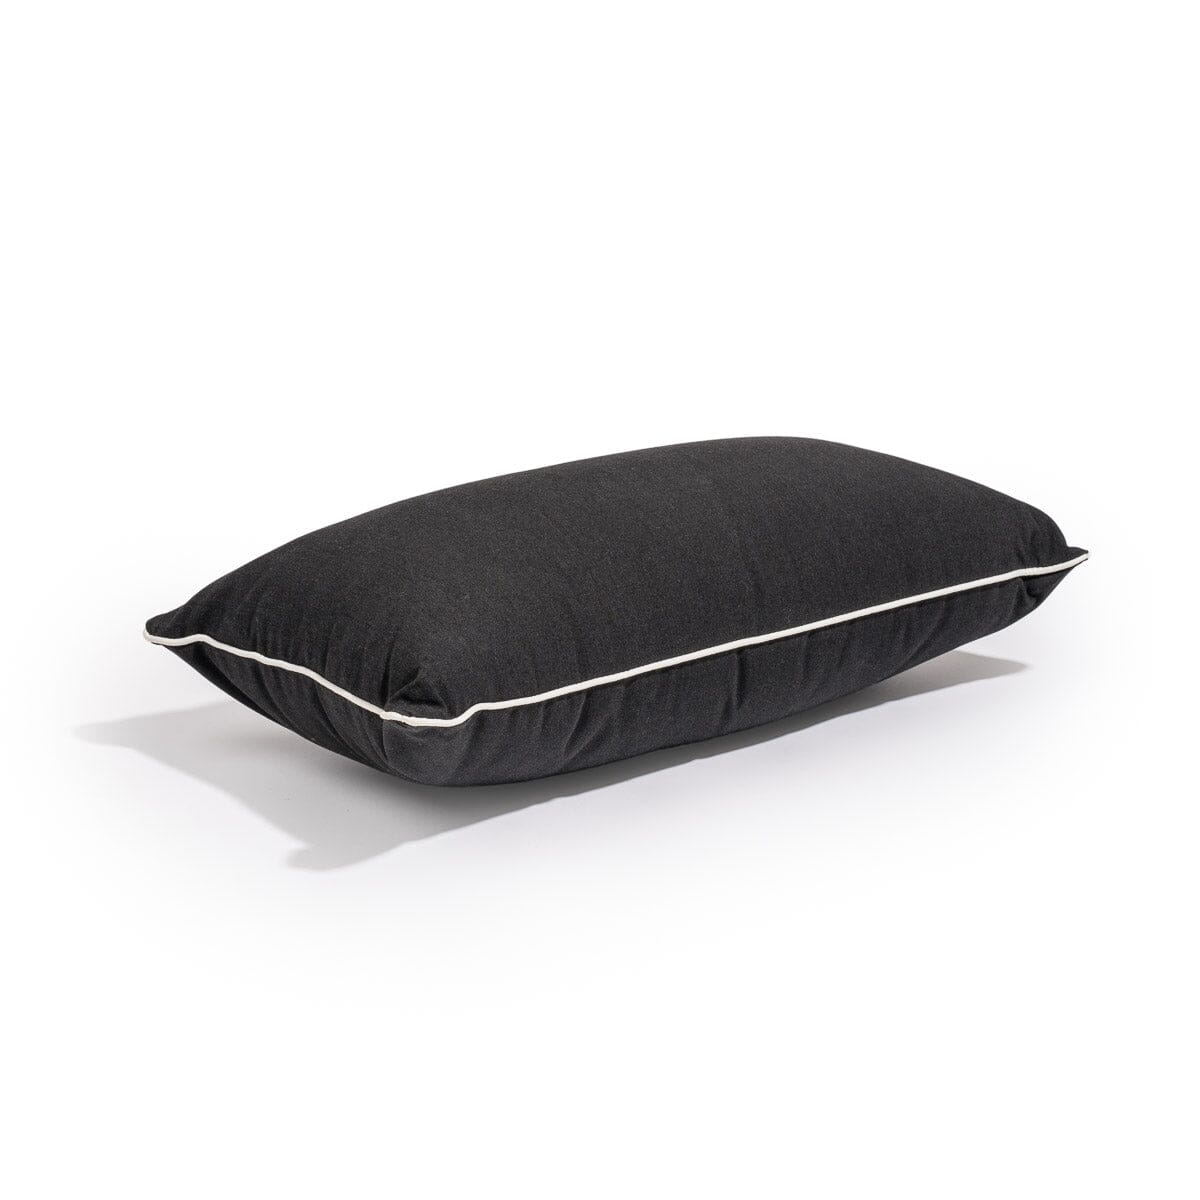 The Rectangle Throw Pillow - Rivie Black Rectangle Throw Pillow Business & Pleasure Co 